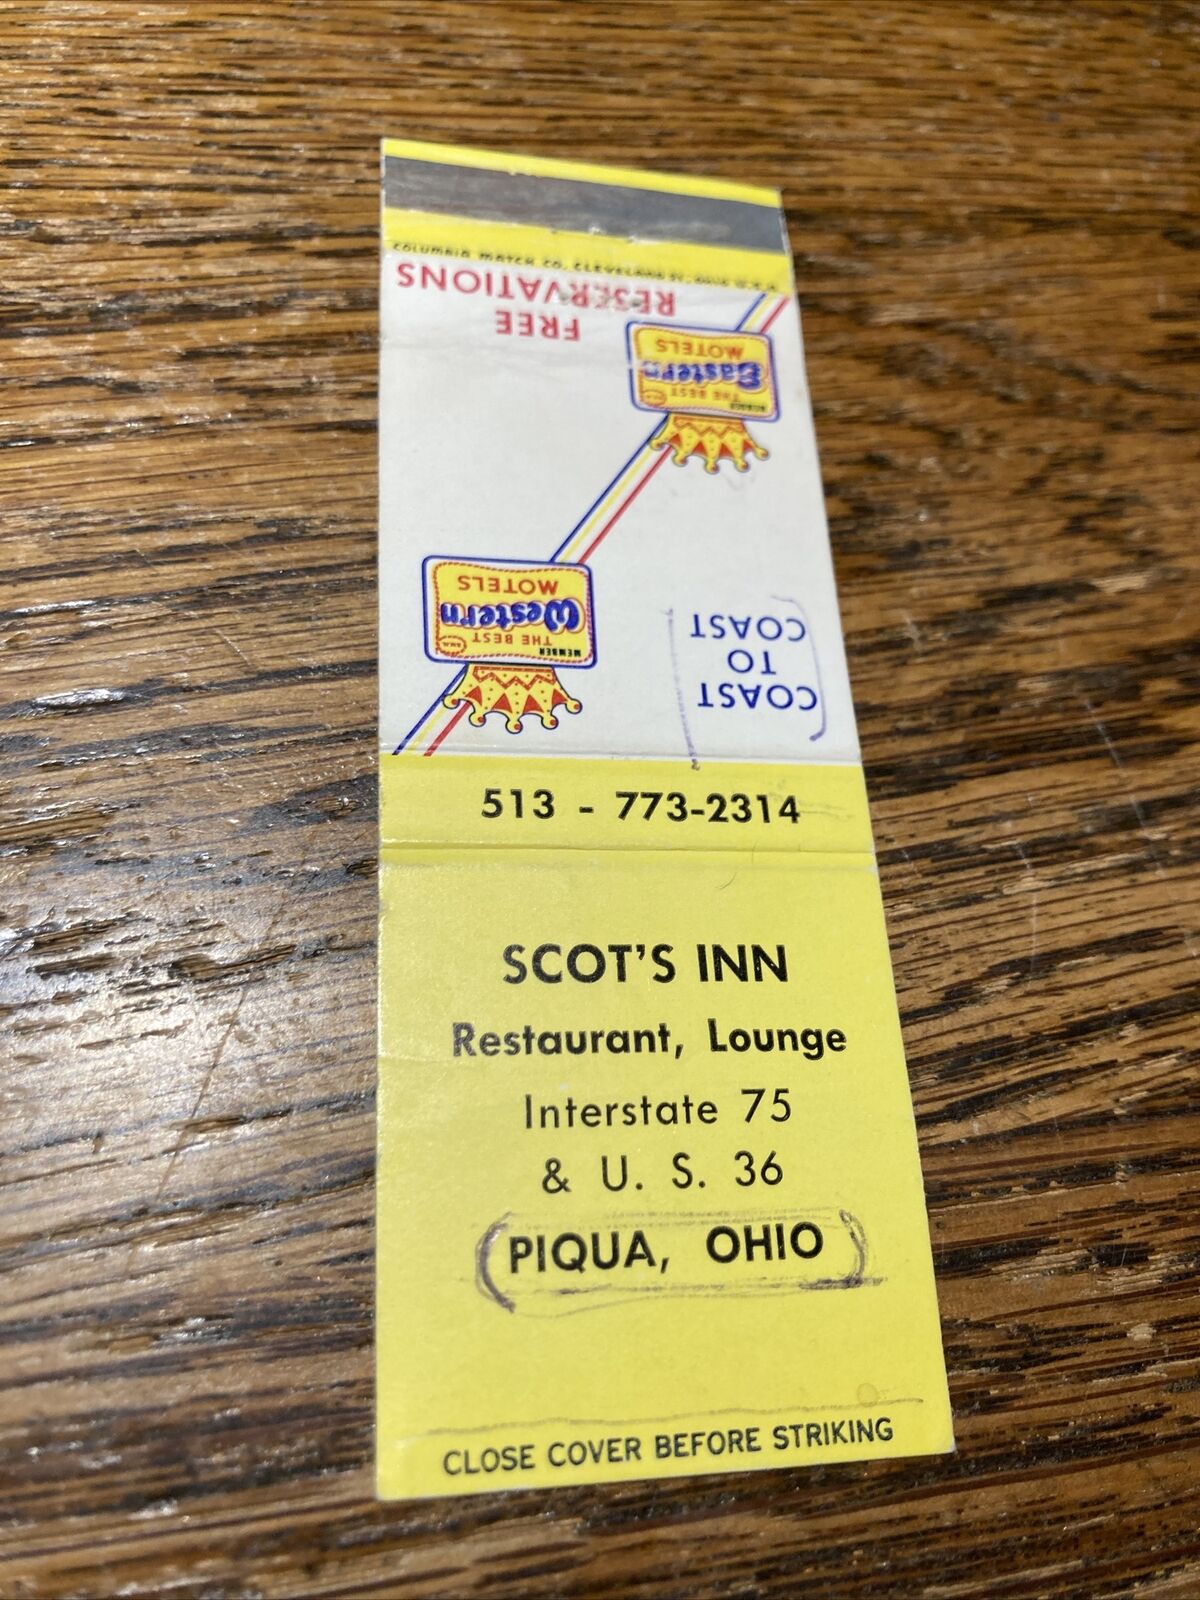 Best Western Scott’s Inn, Piqua, Ohio Matchbook Cover